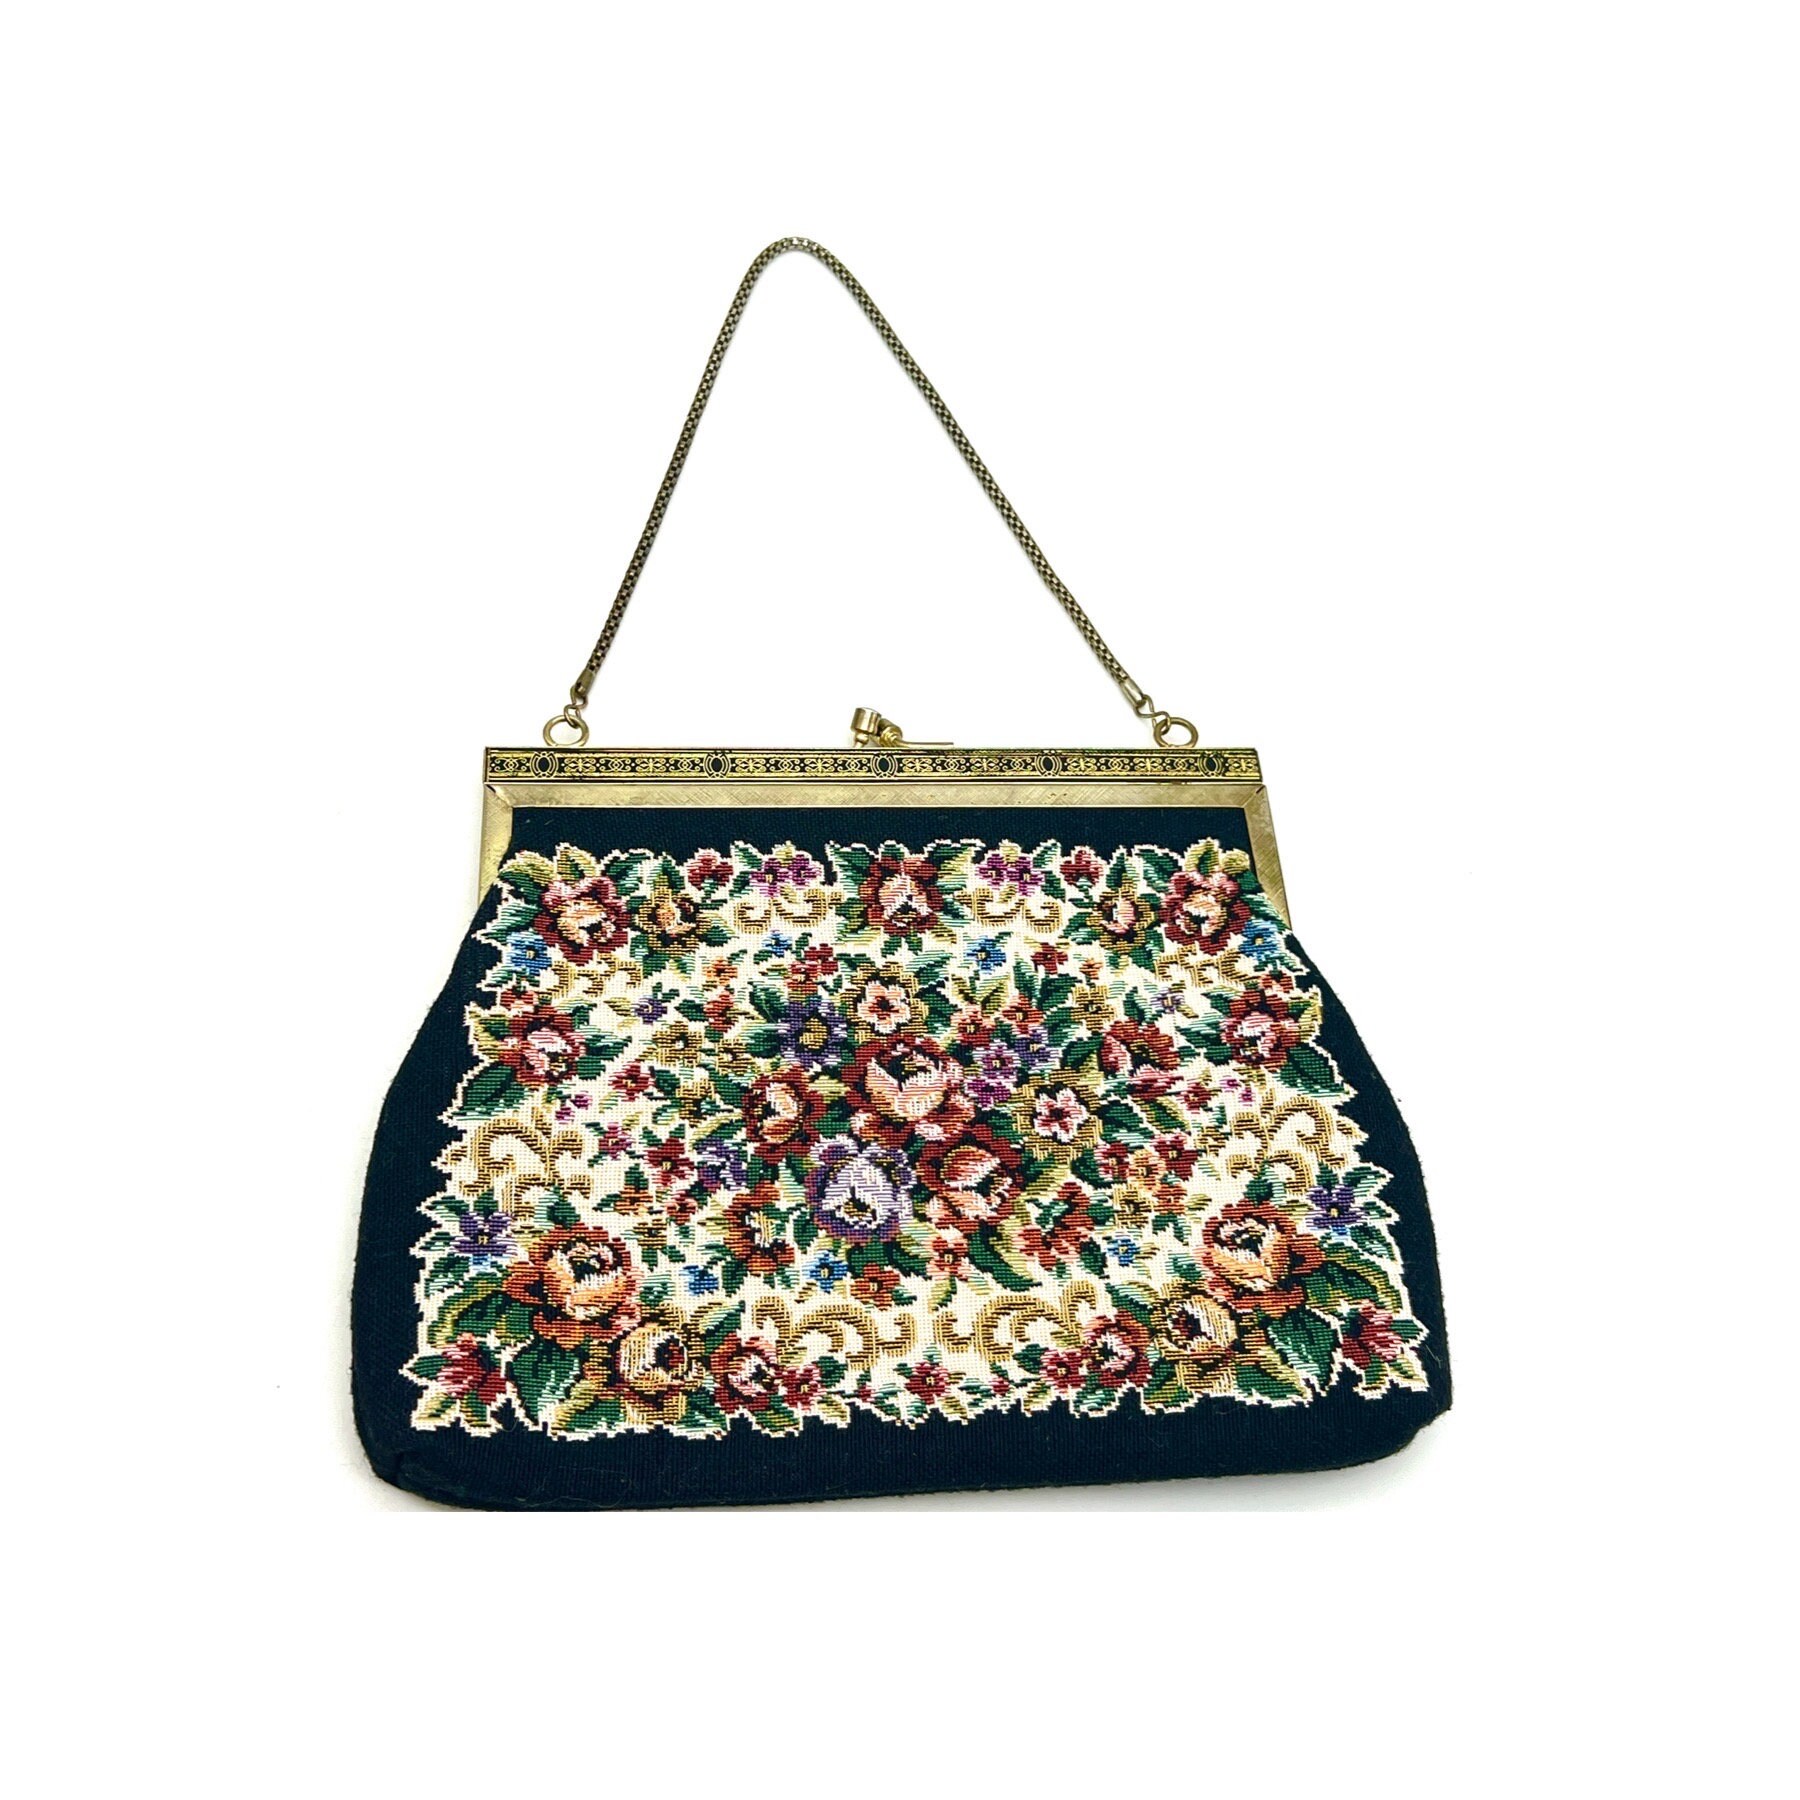 New purse lover, anyway here's Grandma's vintage Chanel : r/handbags